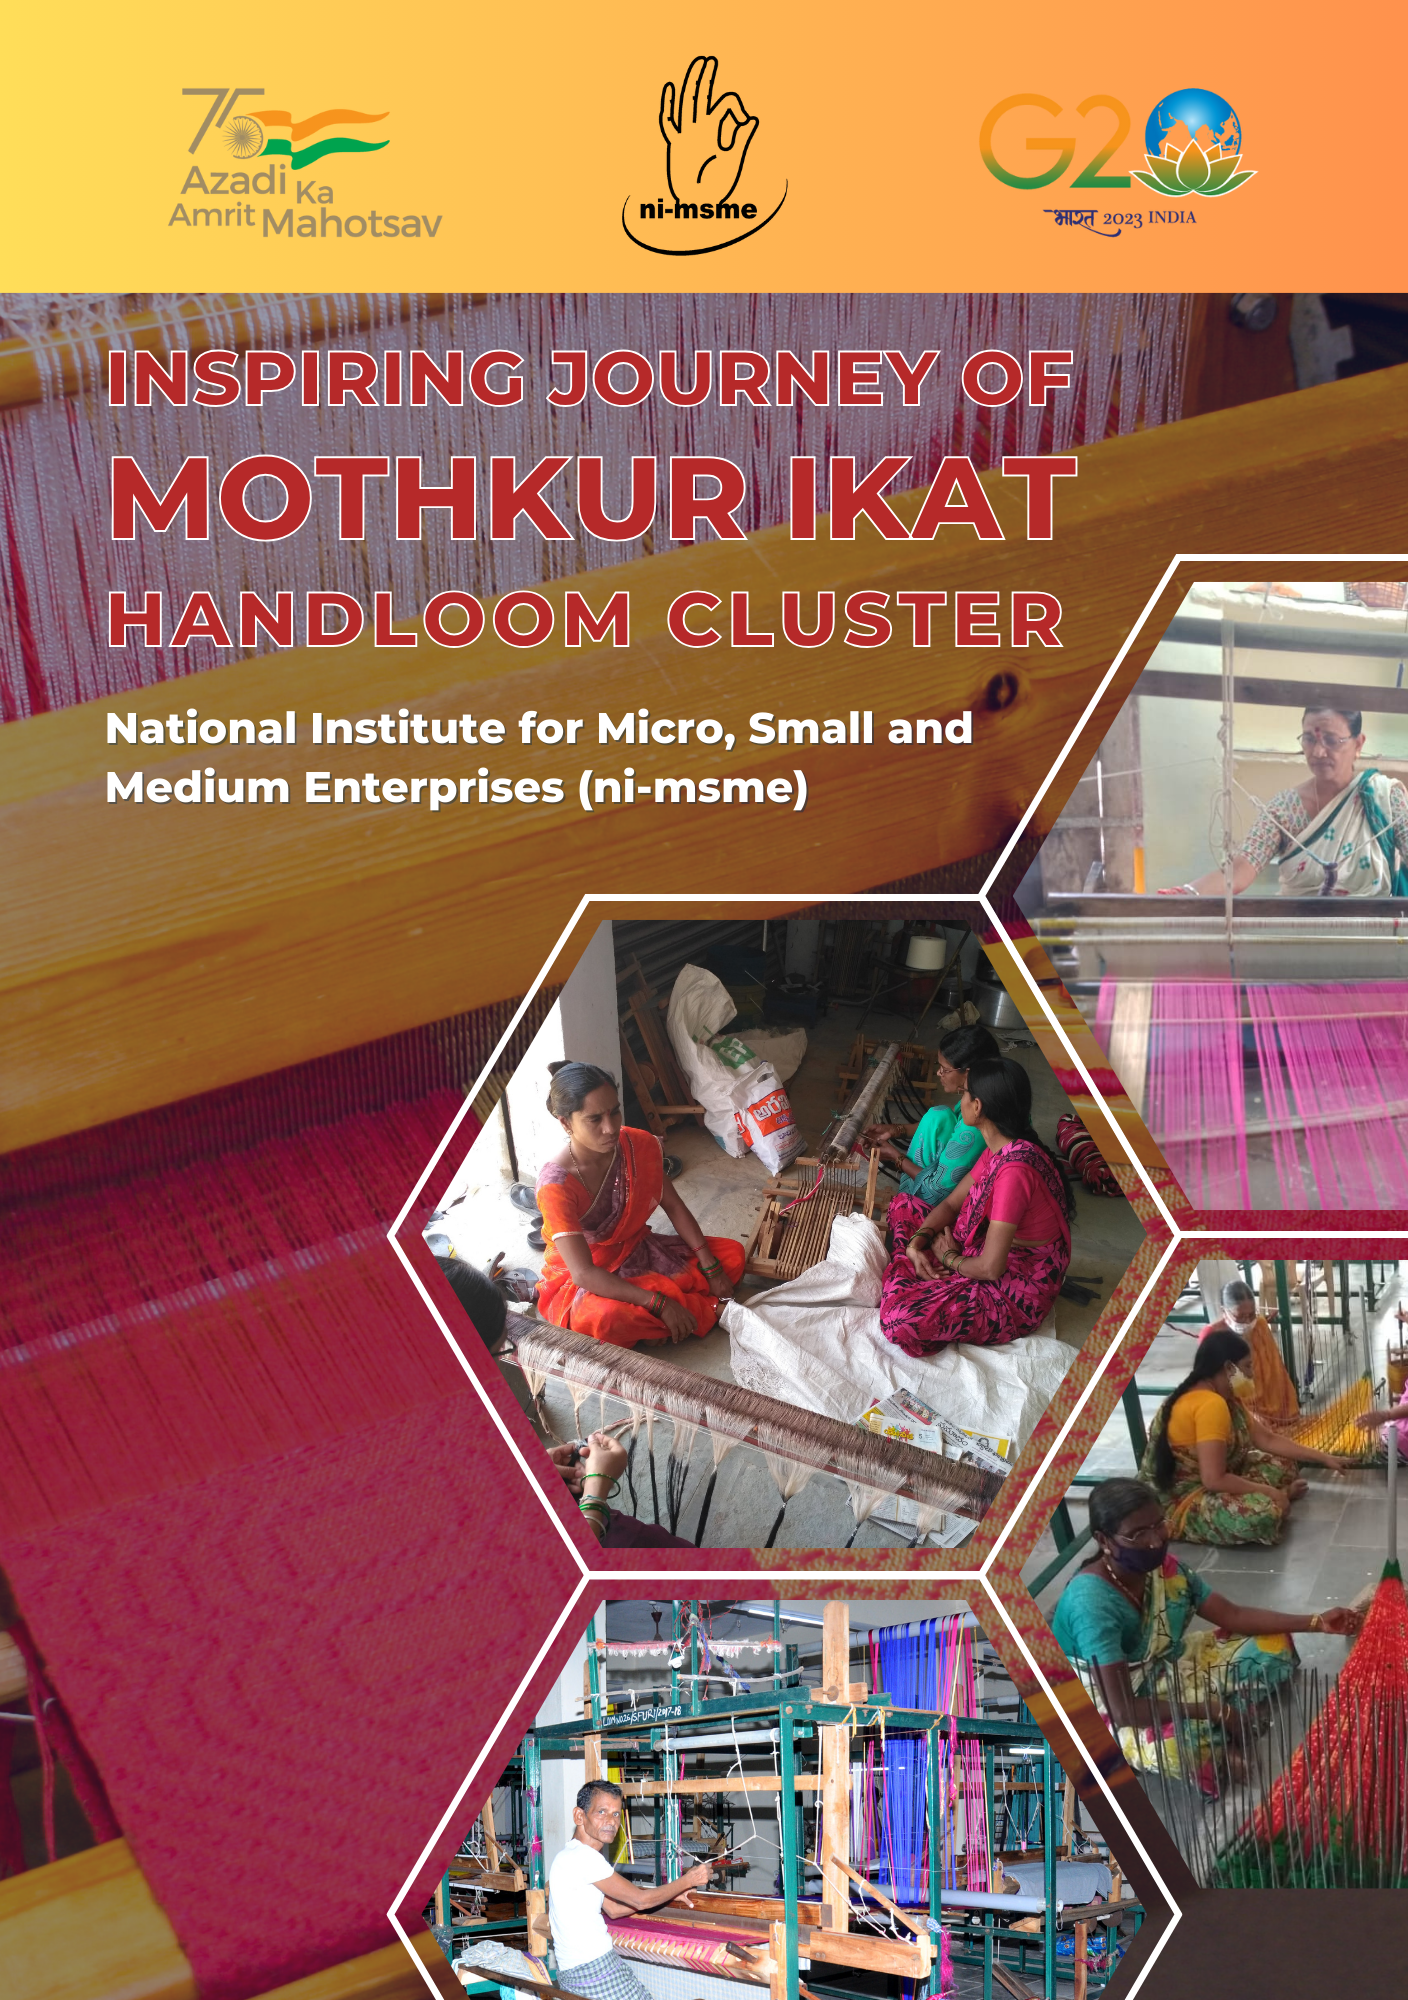 Inspiring Journey of Mothkur Ikkat Handloom Cluster